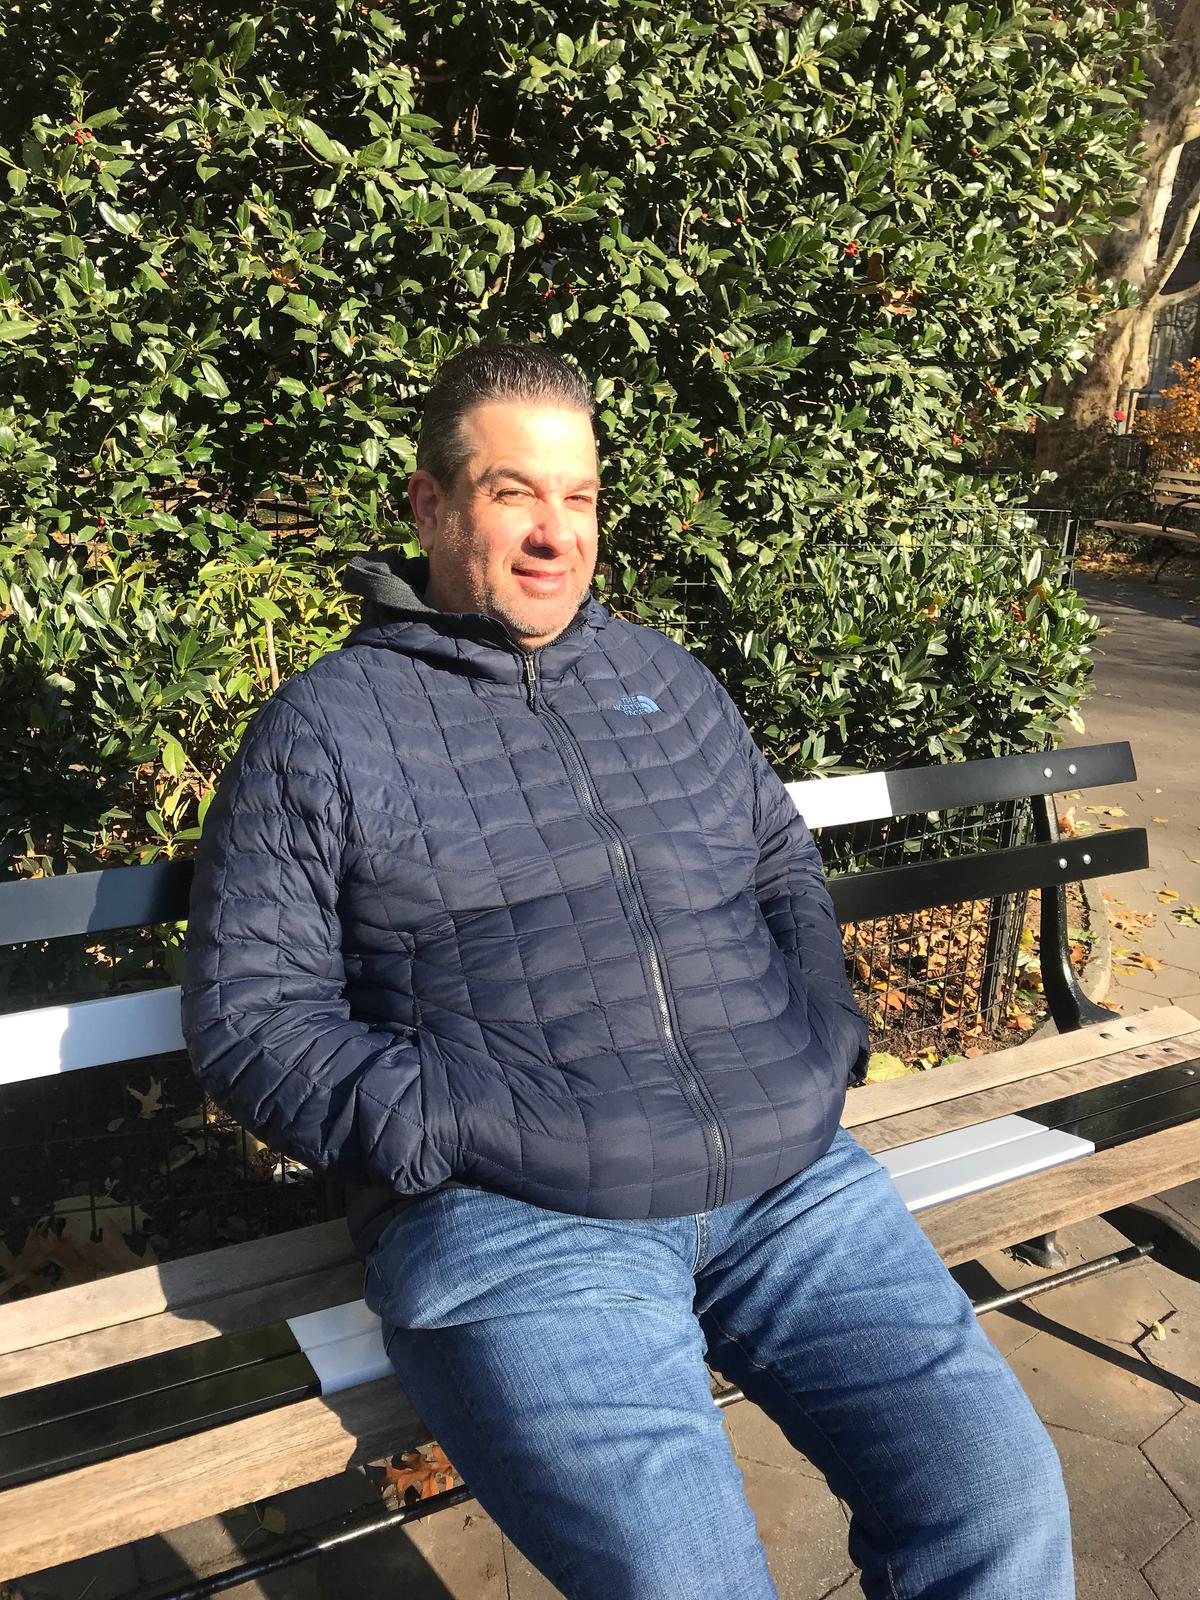 John Gloetzner in Maddison Square Park, New York, on Nov. 23, 2018. (Stuart Liess/The Epoch Times)